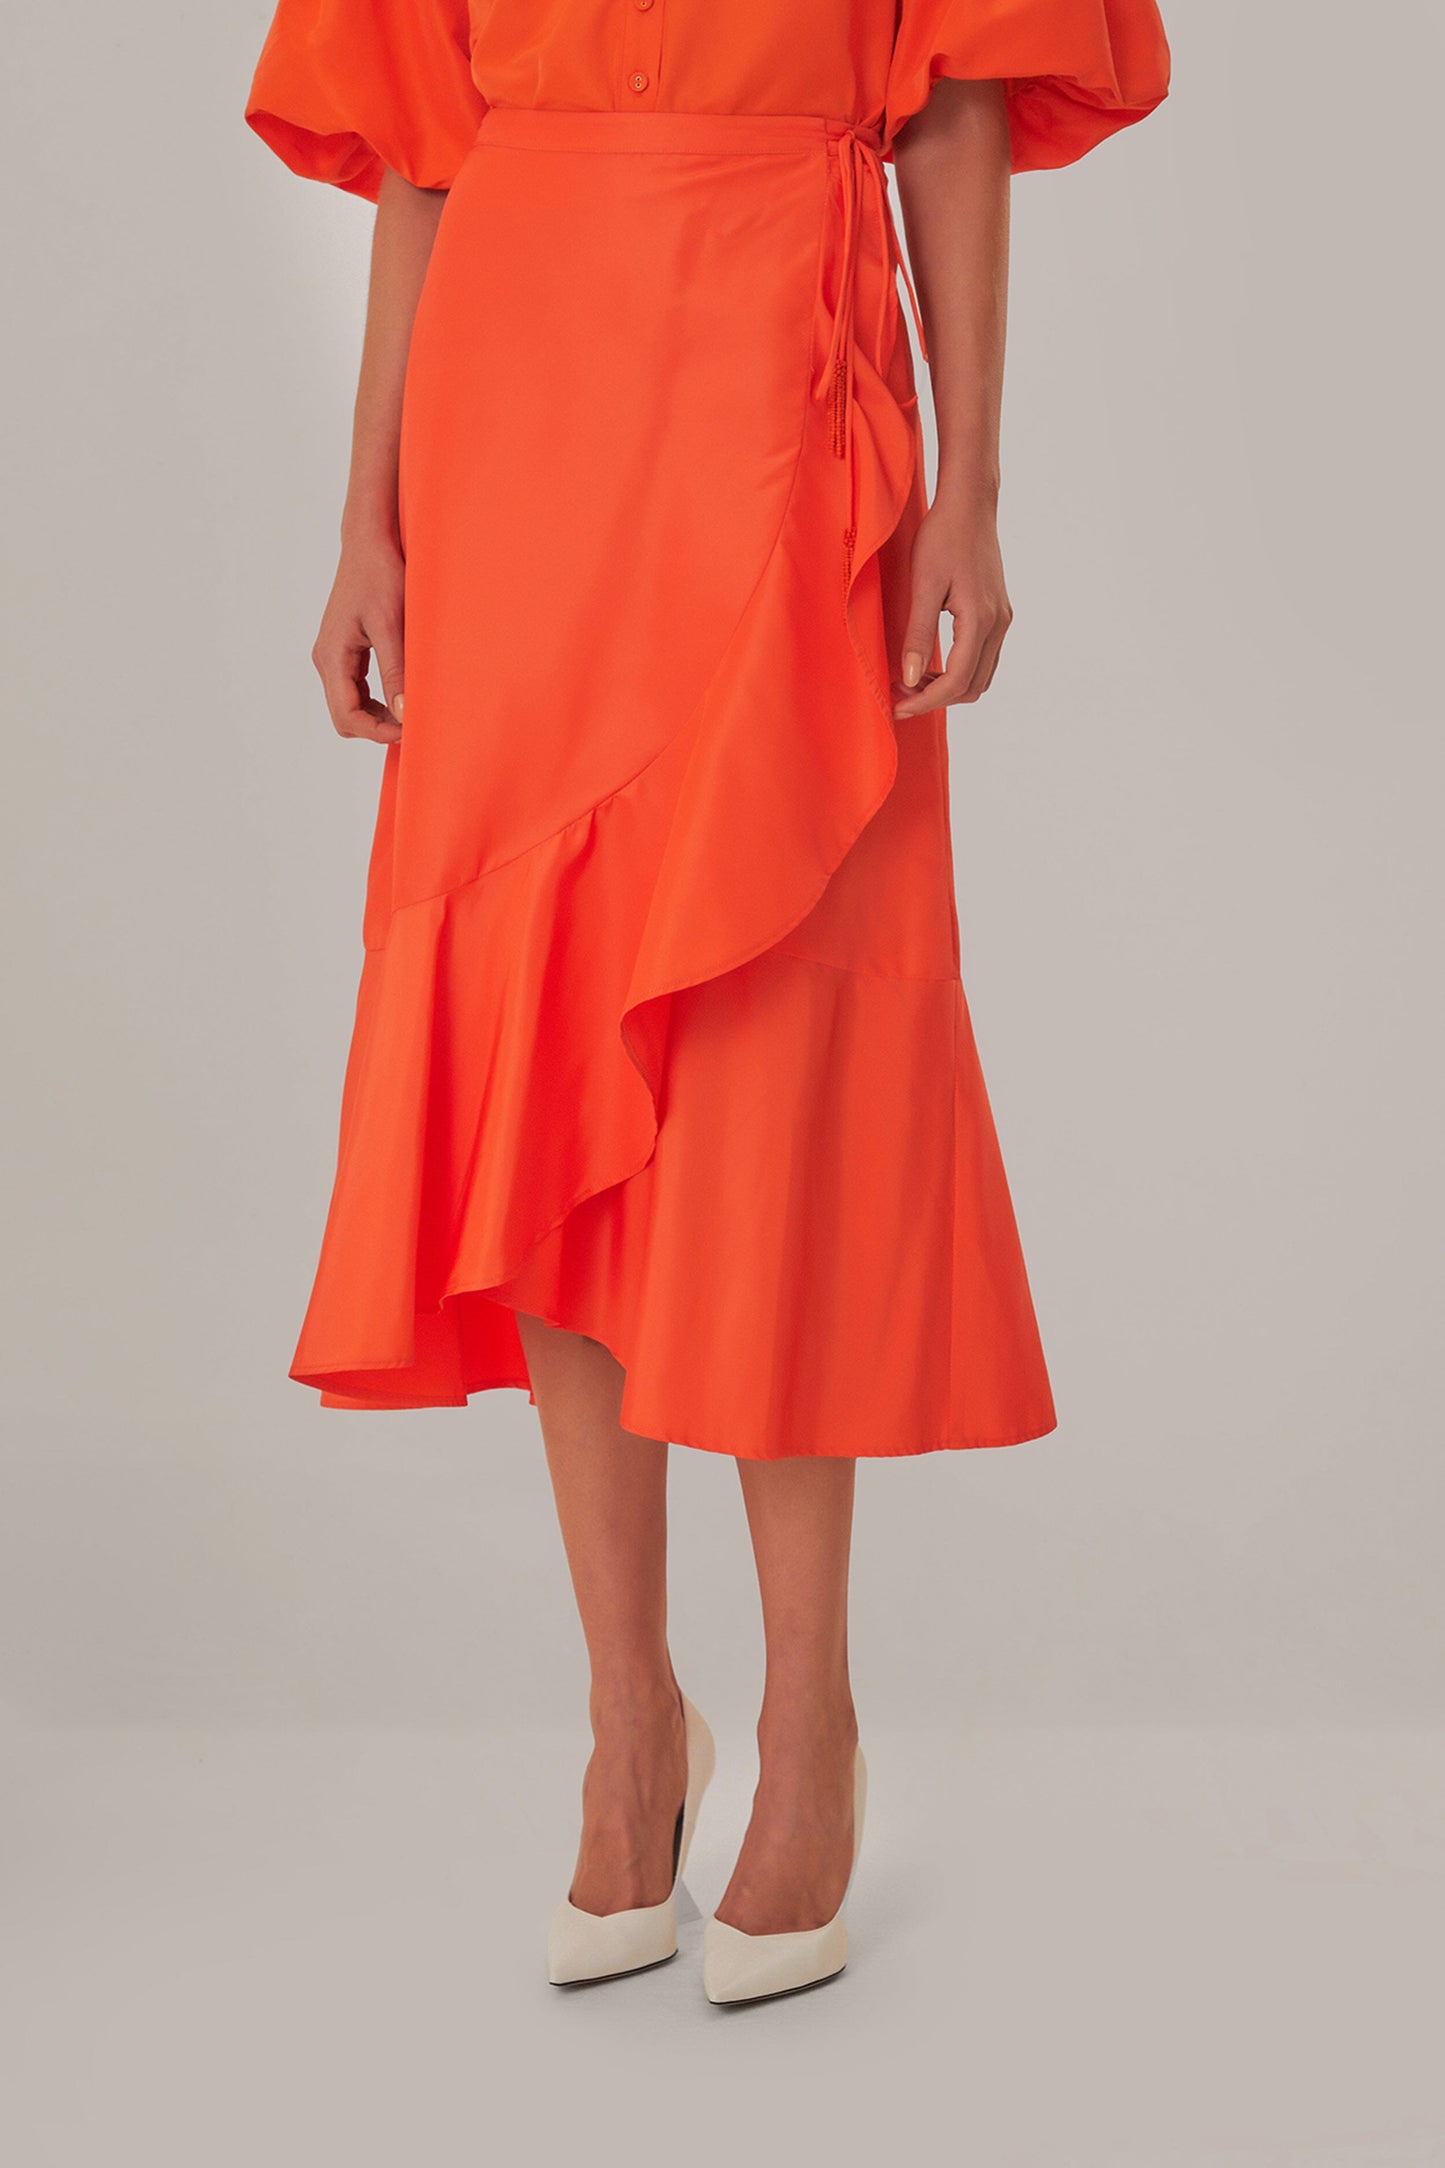 Vivid Orange Midi Skirt